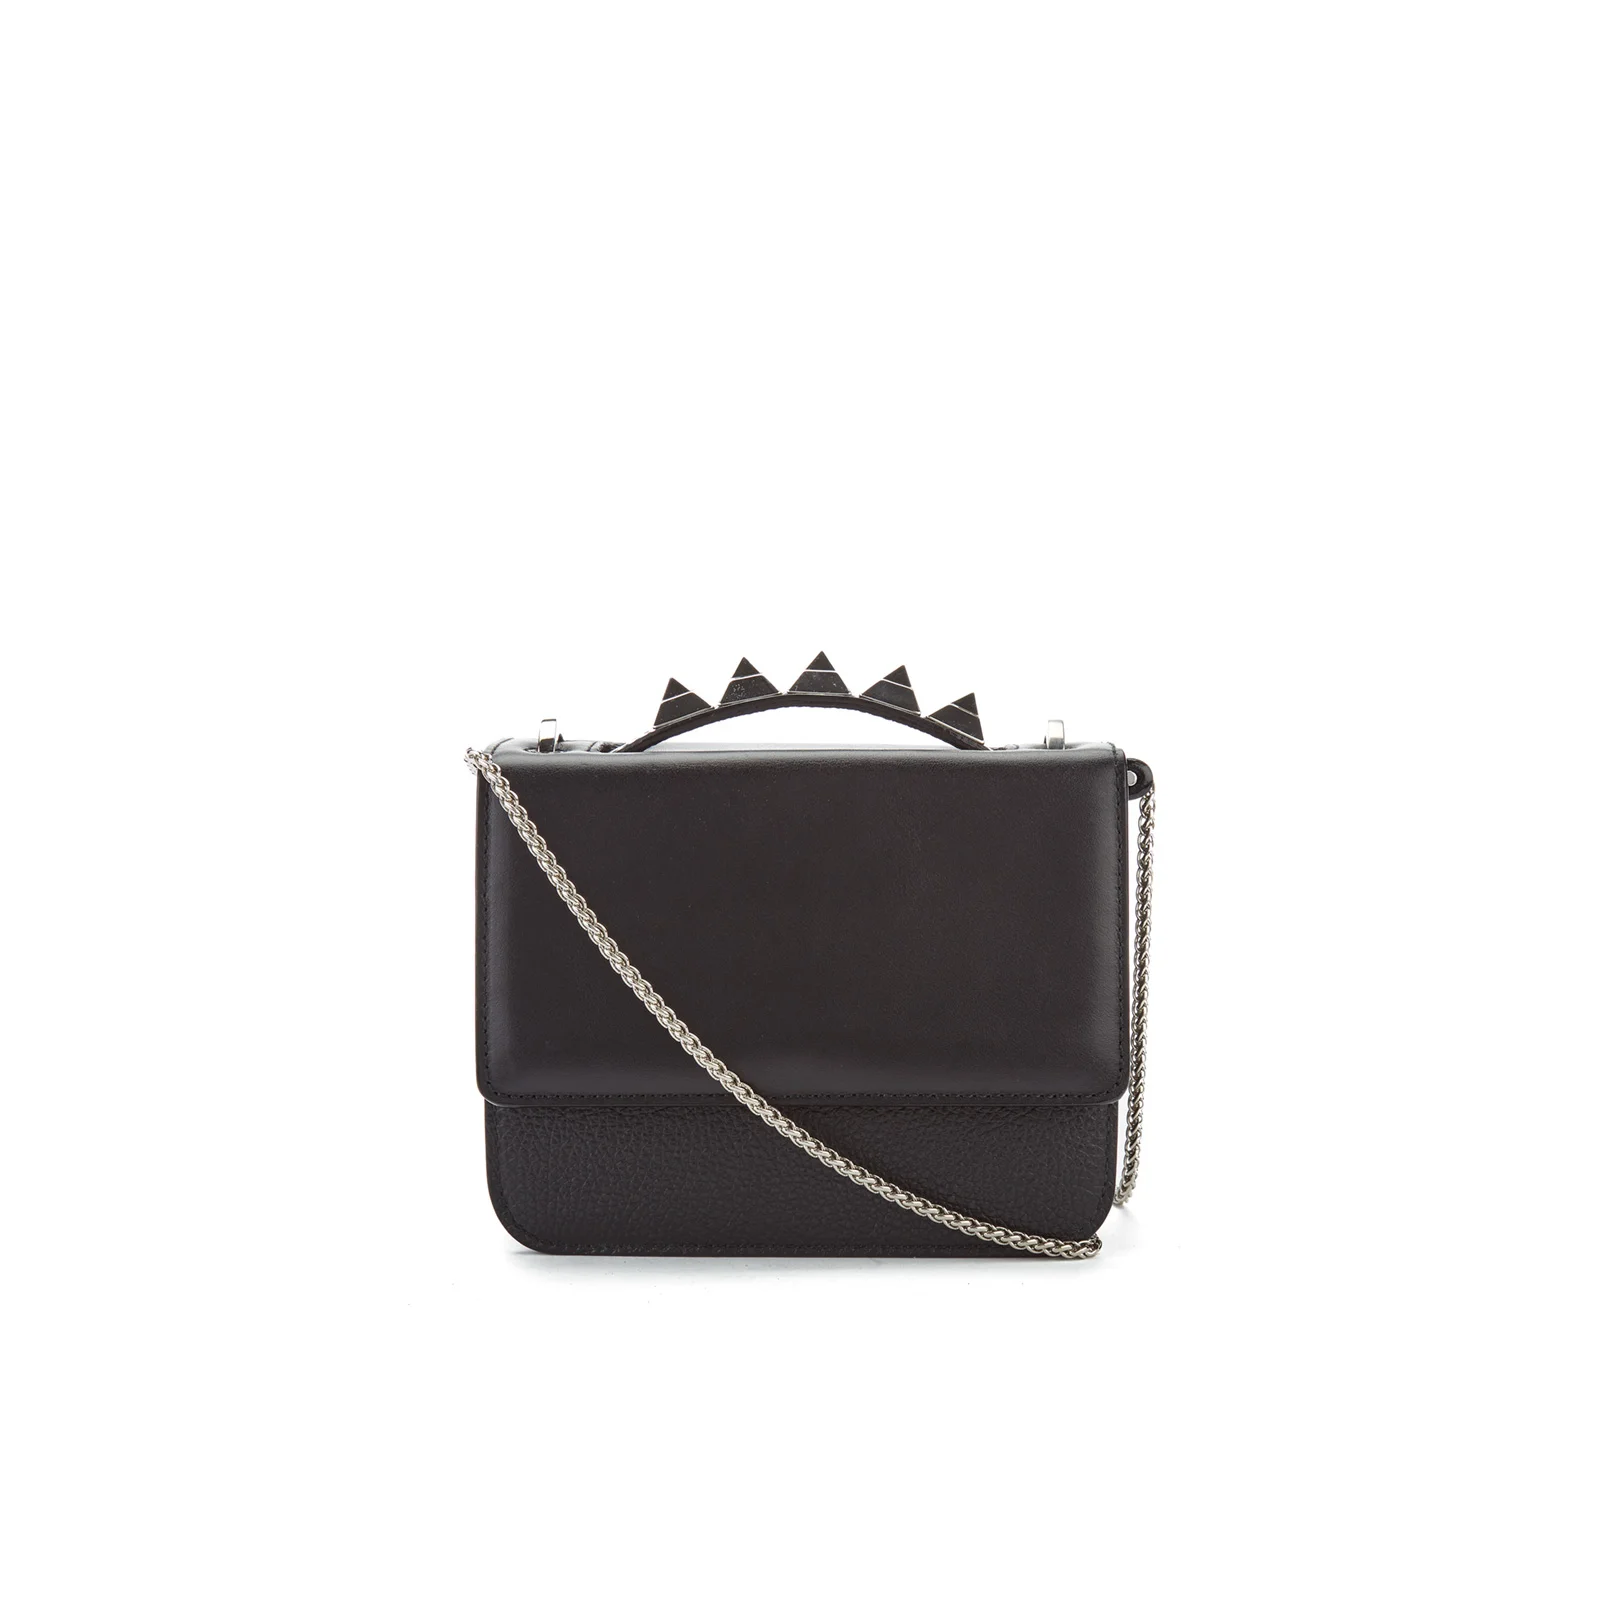 SALAR Women's Lulla Small Bag - Black Image 1